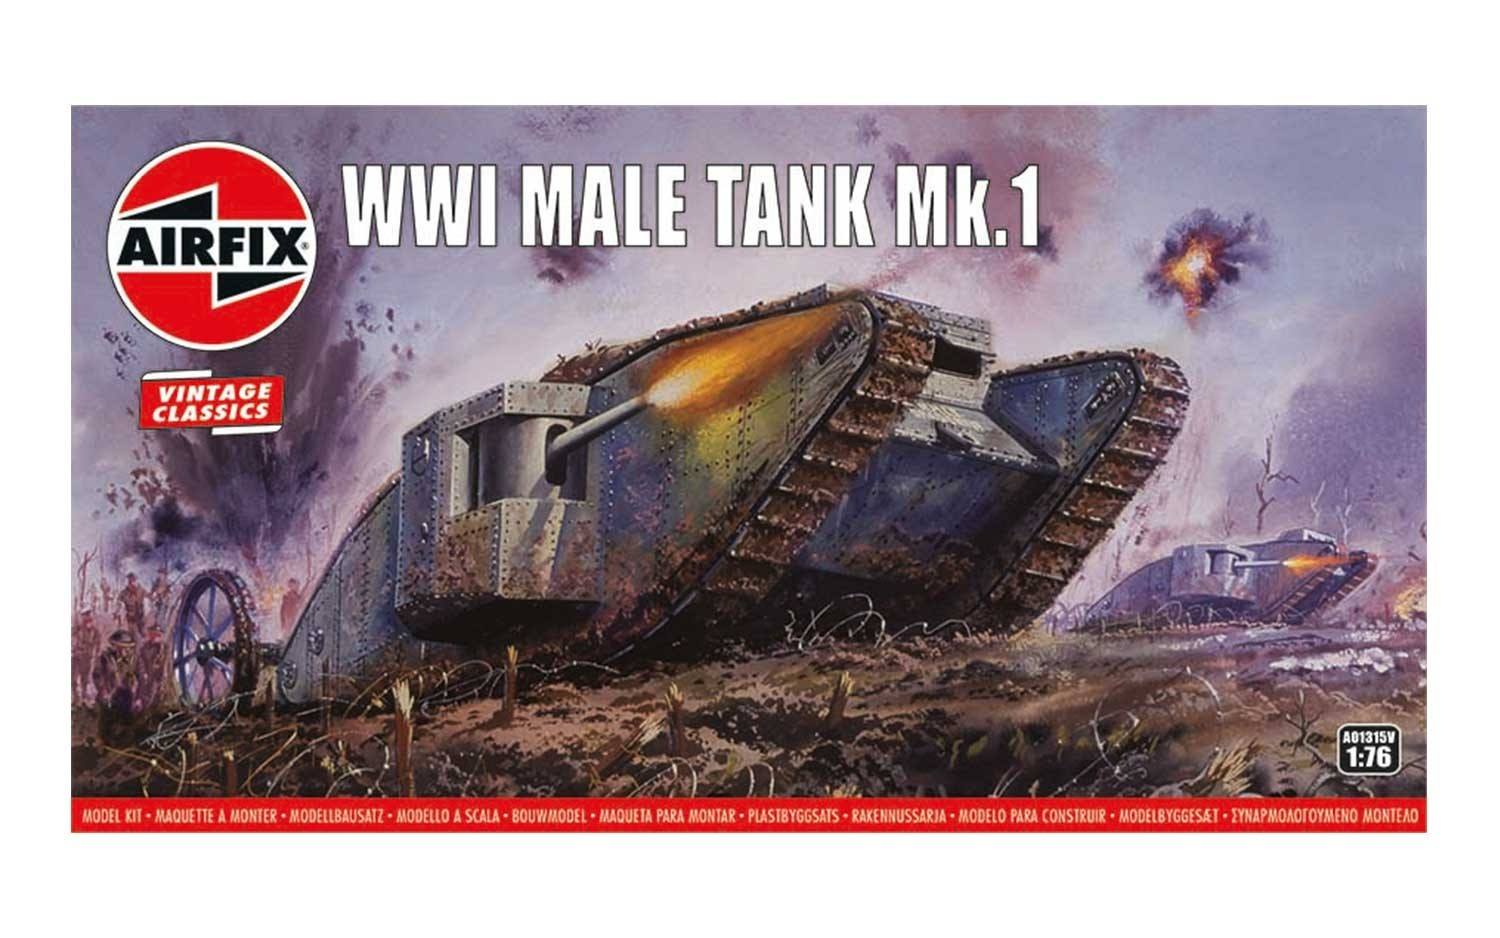 Airfix 1:76 Vintage Classics WWI Male Tank Mk.I #01315V - De Koe Deventer